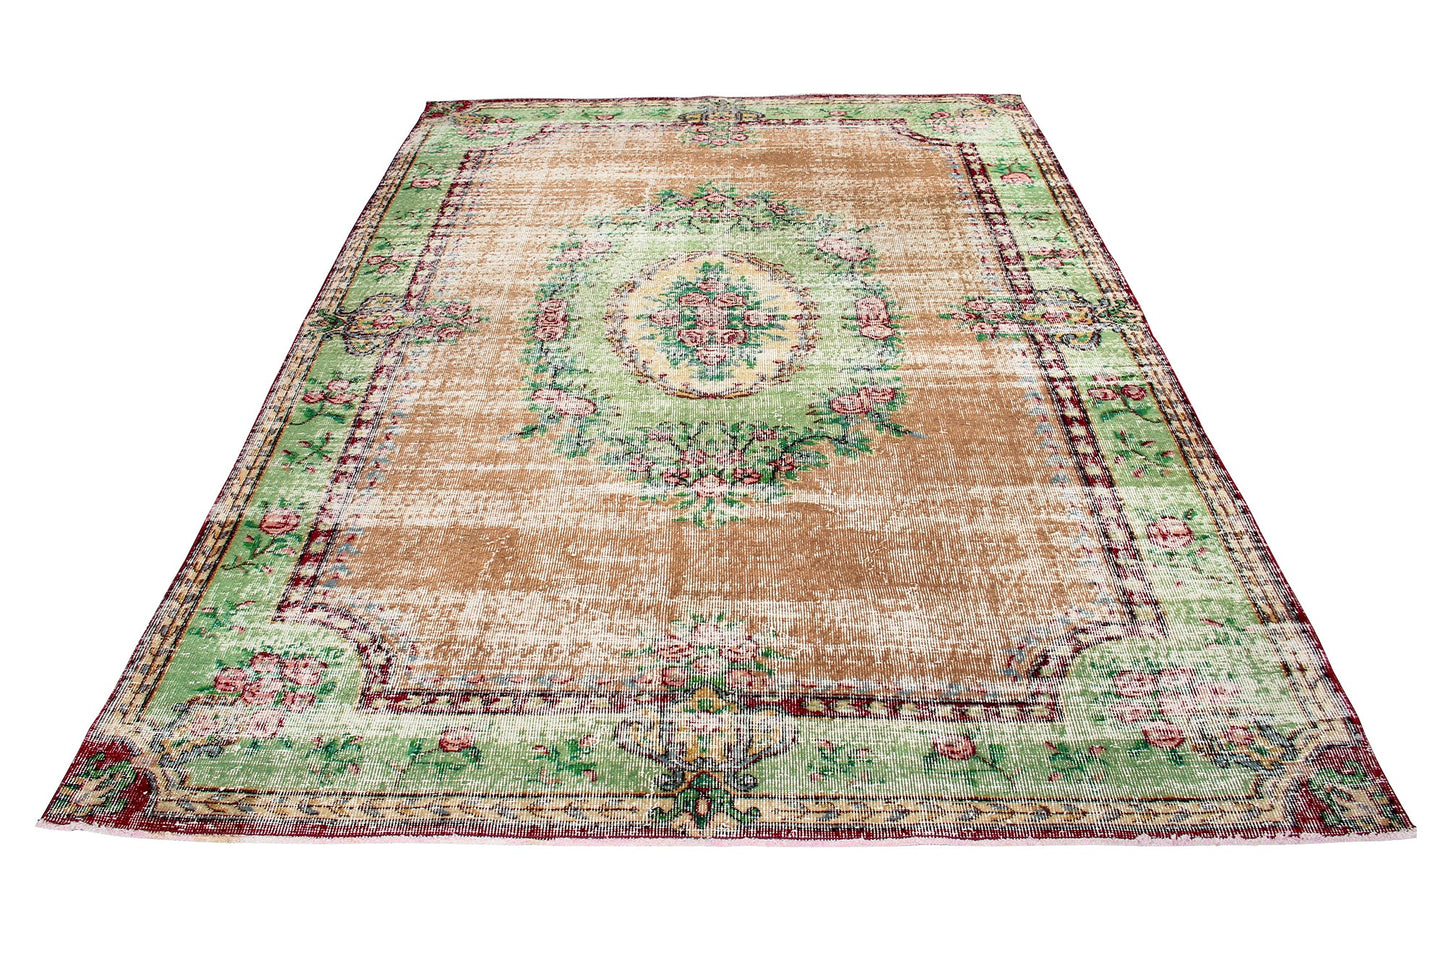 Vintage Handwoven Wool Turkish Carpet product image #27555832561834